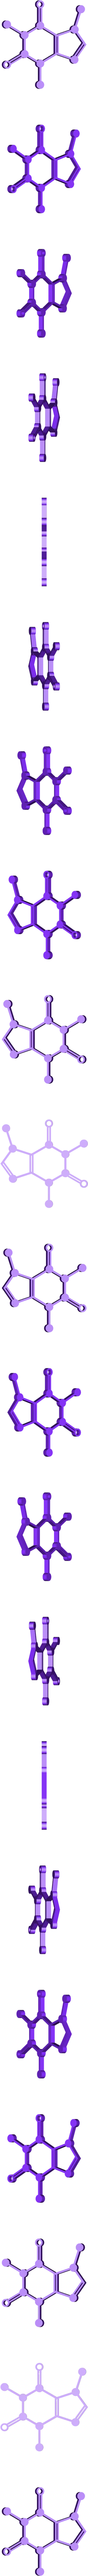 Corrupted Caffeine Molecule Visualization PNG image